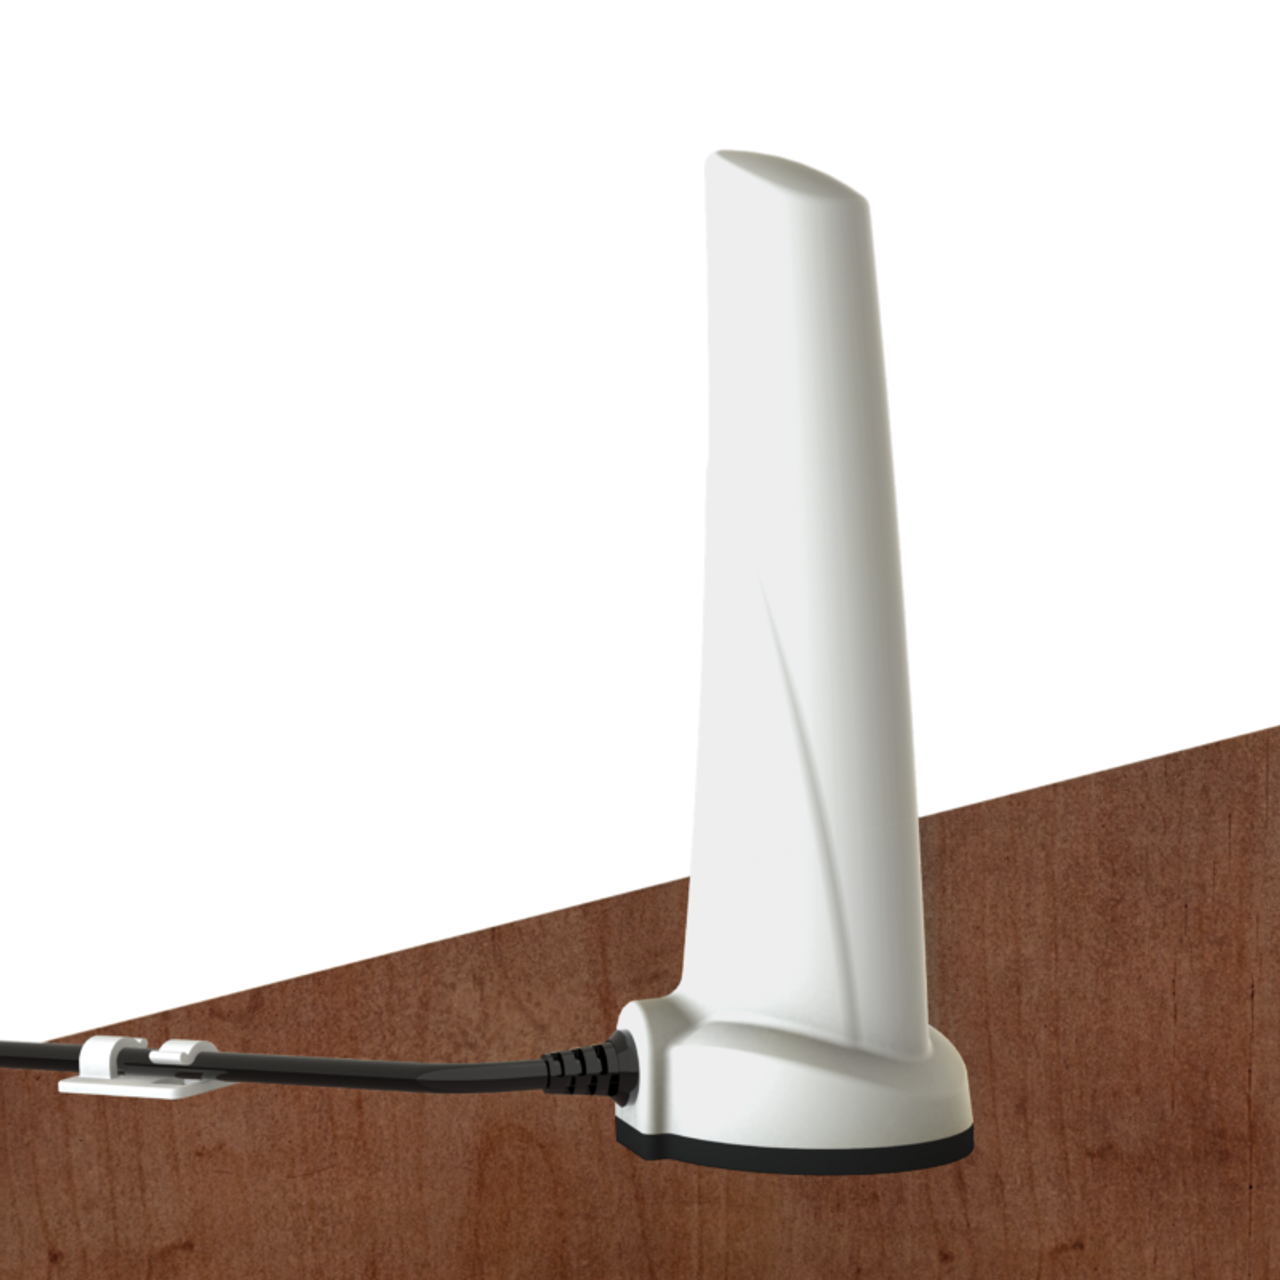 Desktop Antenna mounted on desk